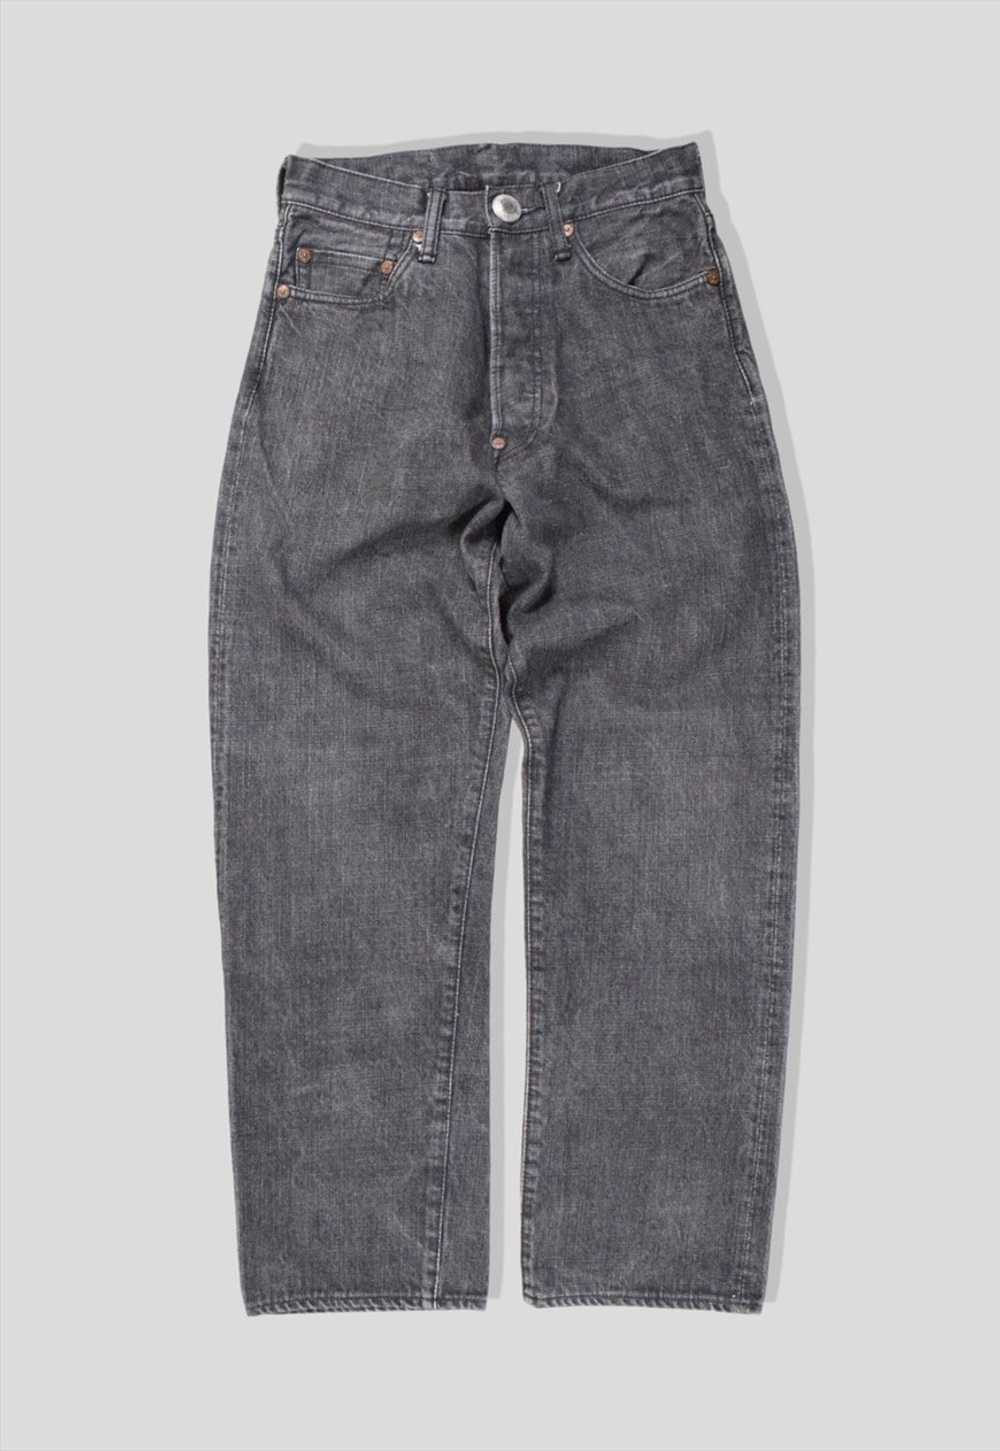 Vintage Evisu Yamane Selvedge Denim Jeans in Grey - image 2